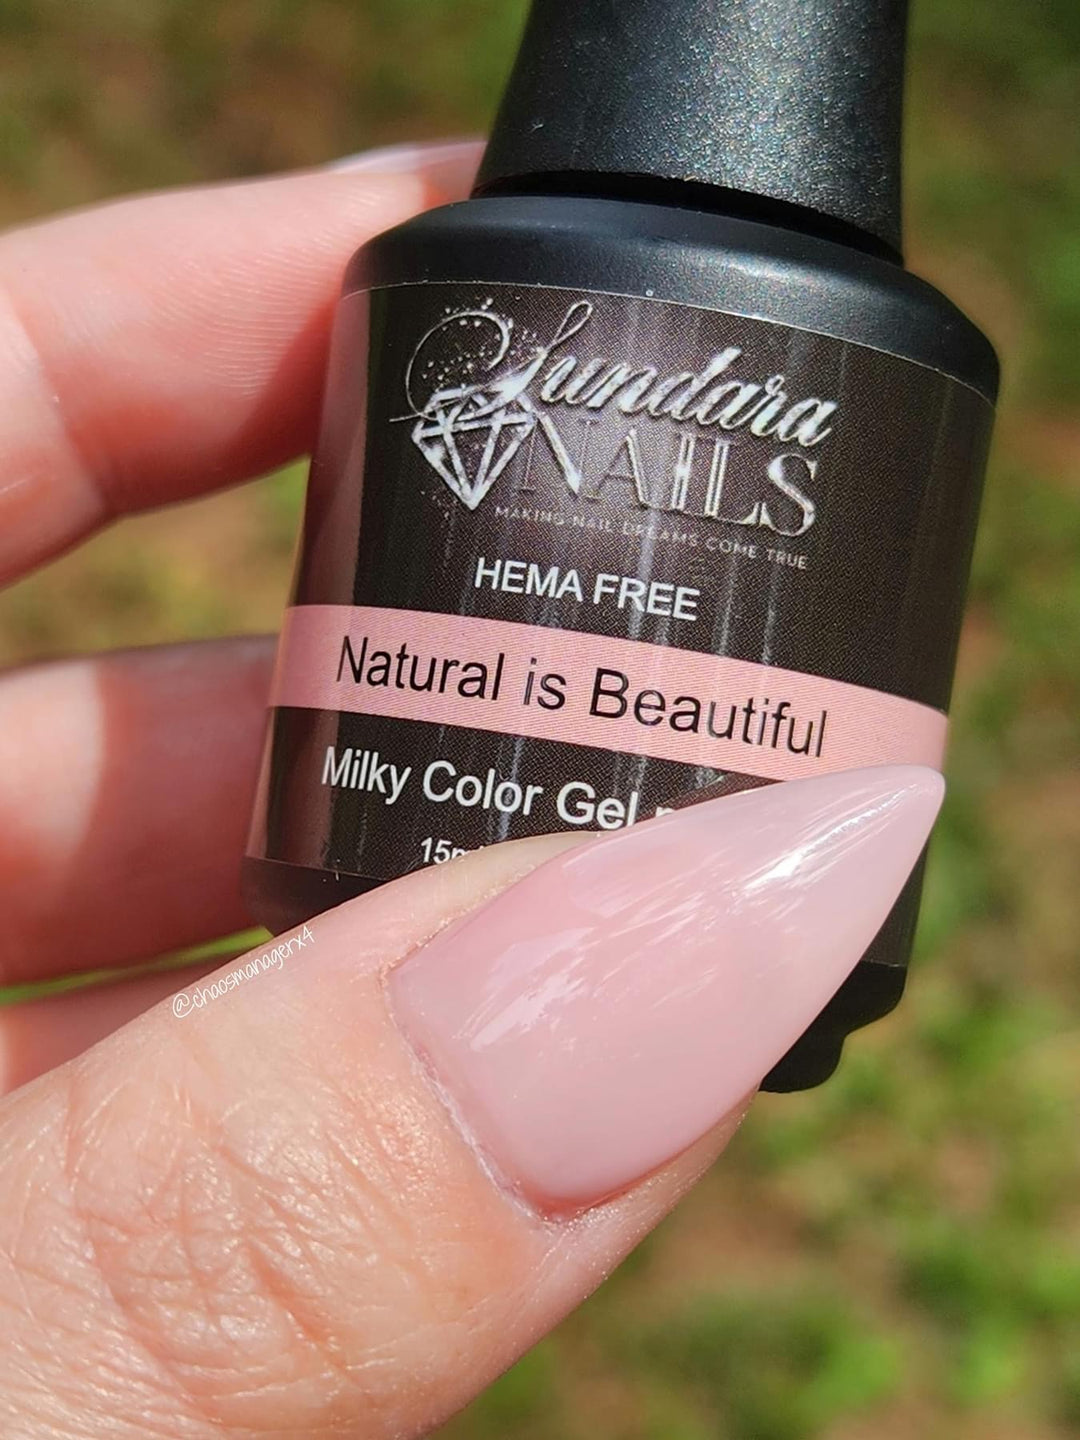 Natural is Beautiful-Hema Free